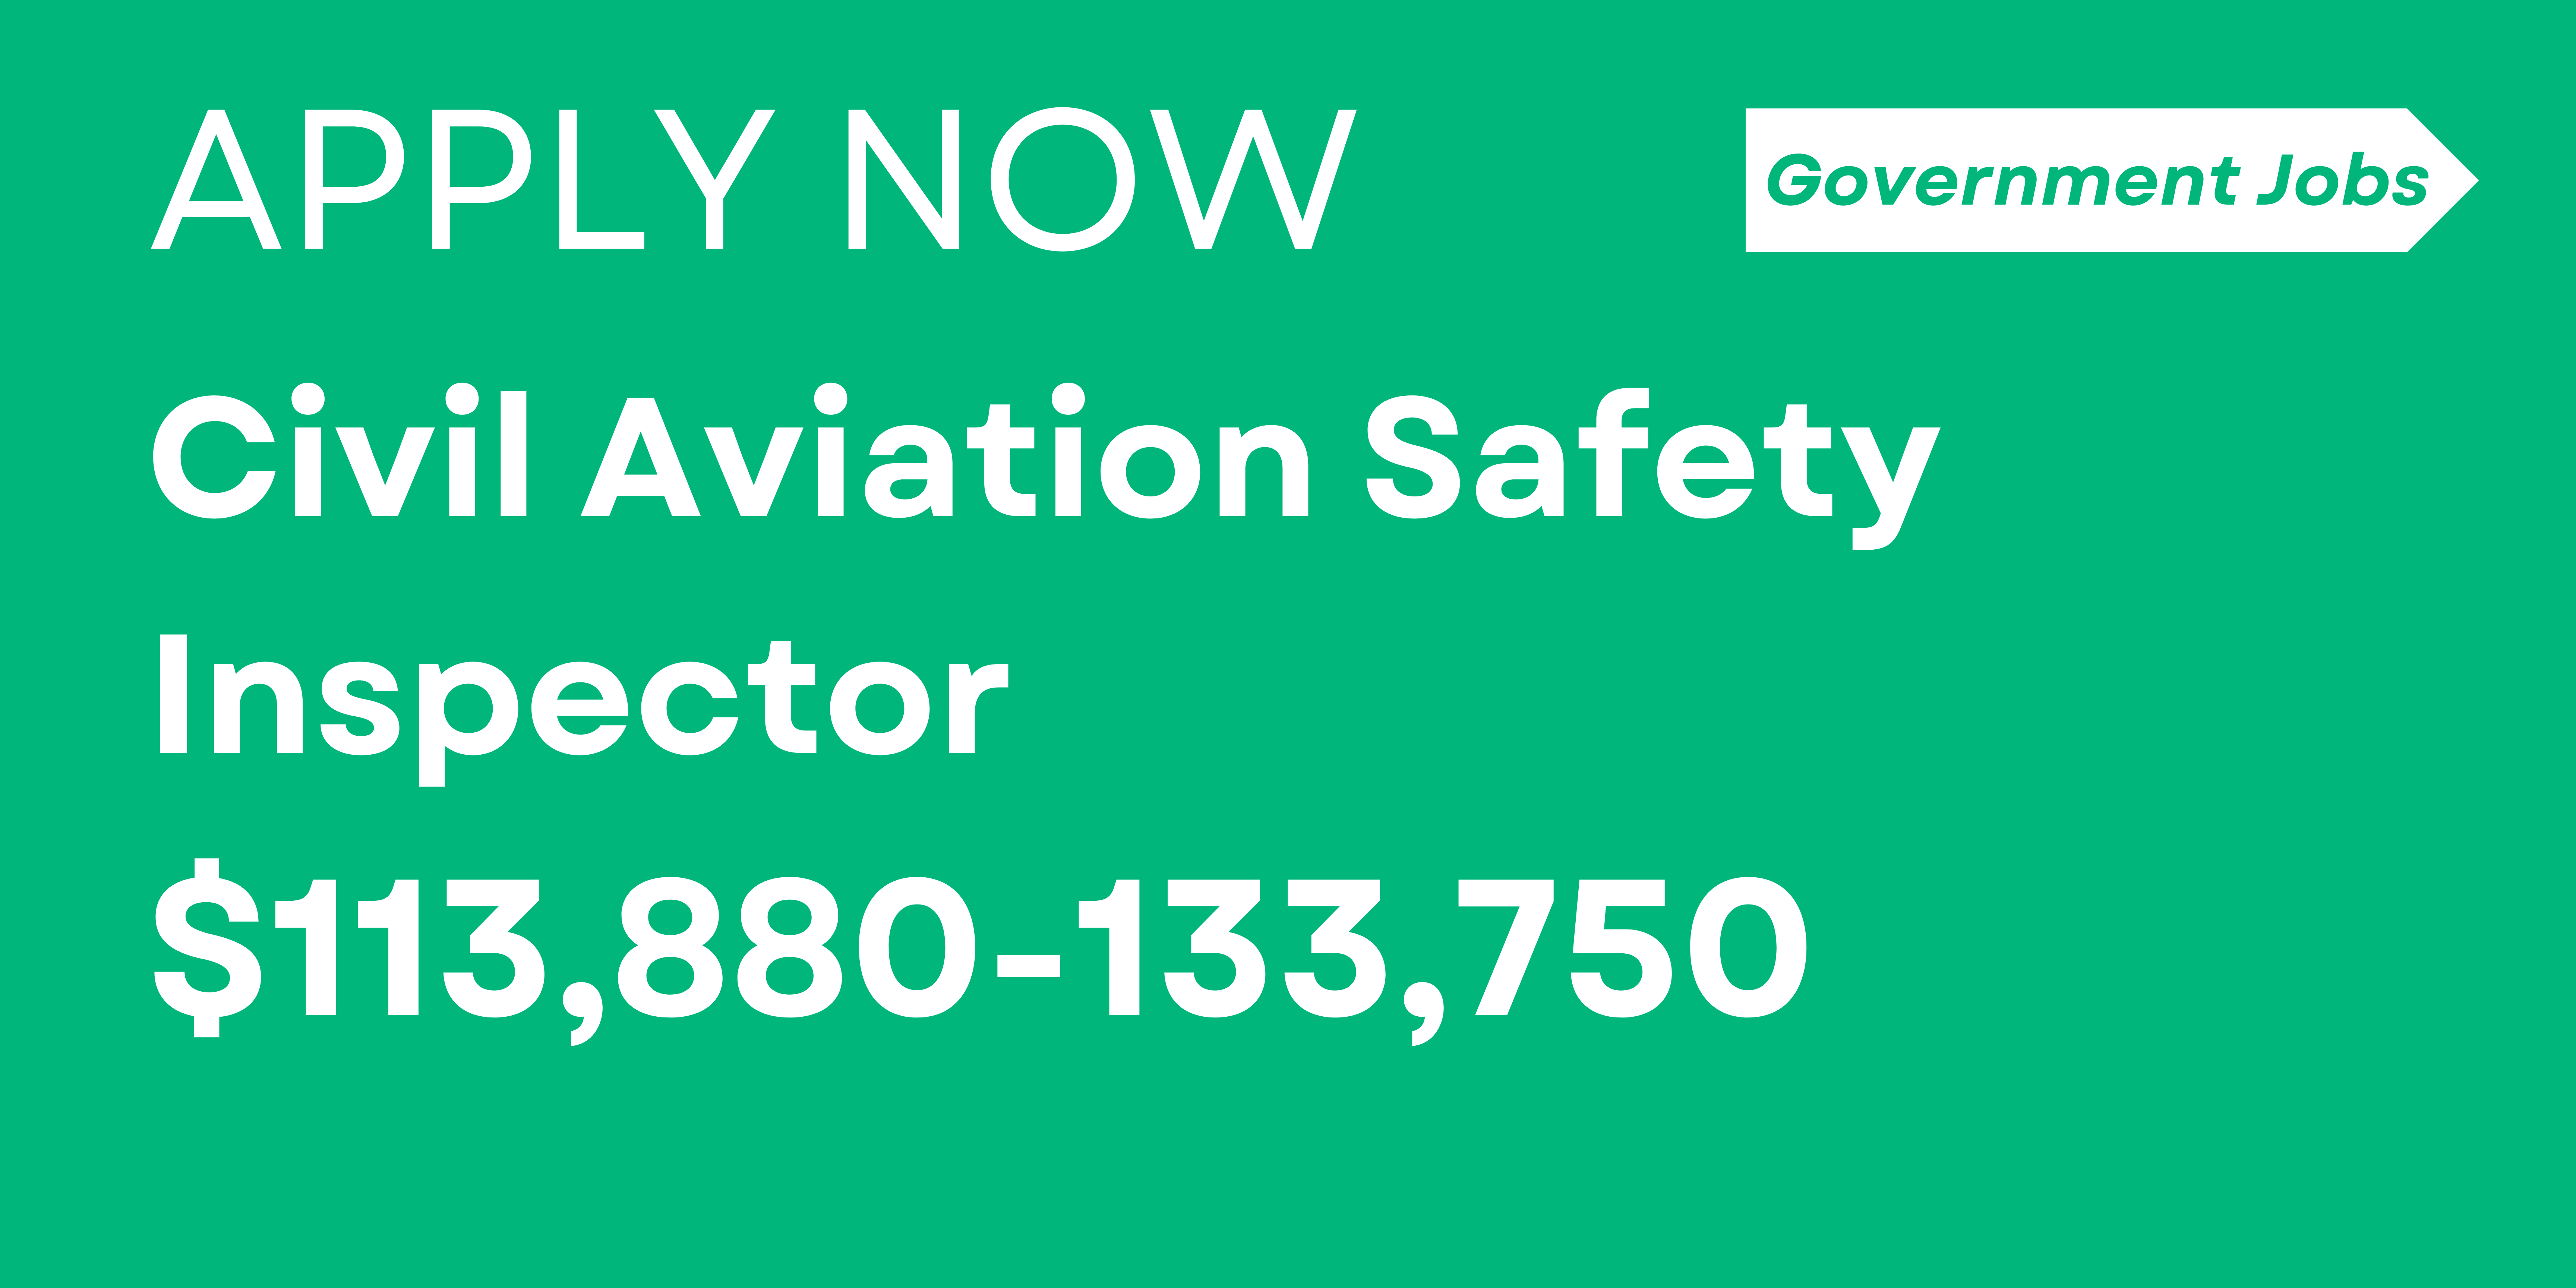 Civil aviation safety Inspector